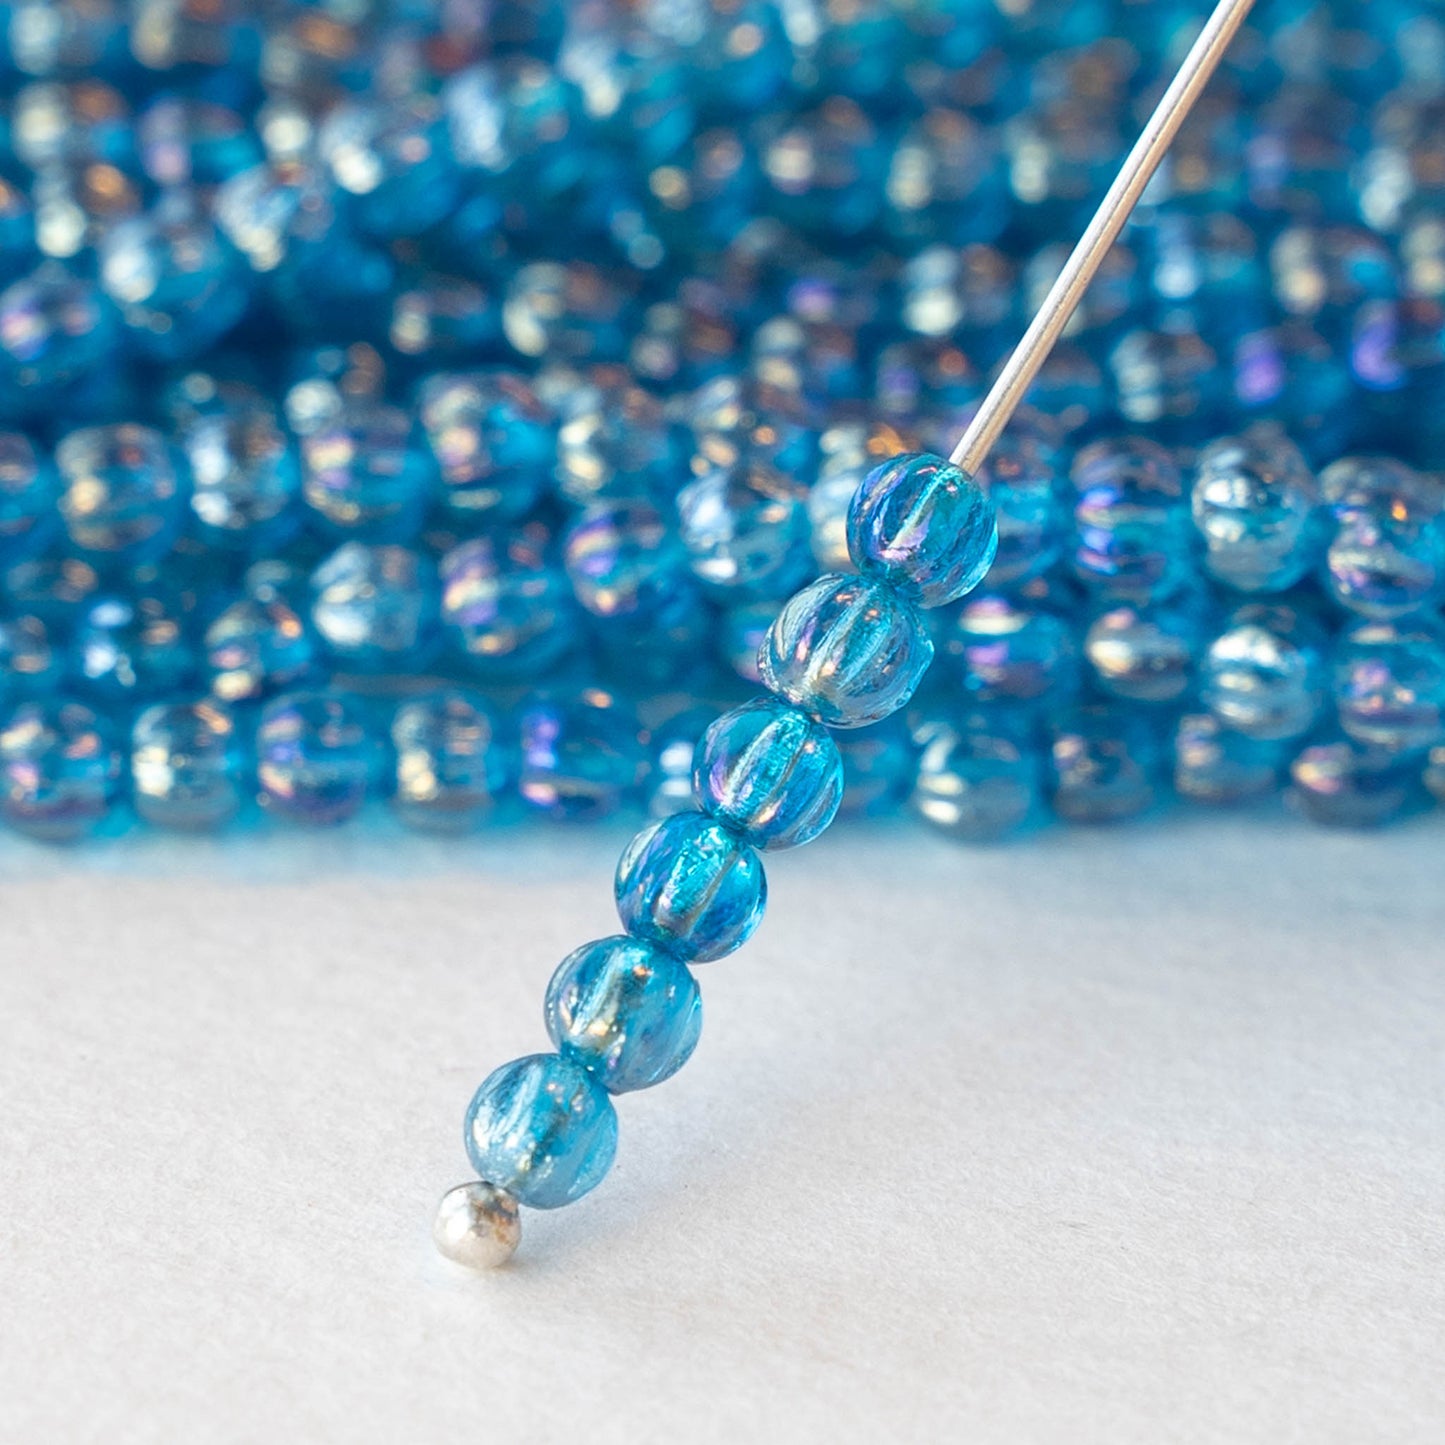 3mm Melon Beads - Capri Blue AB - 100 Beads